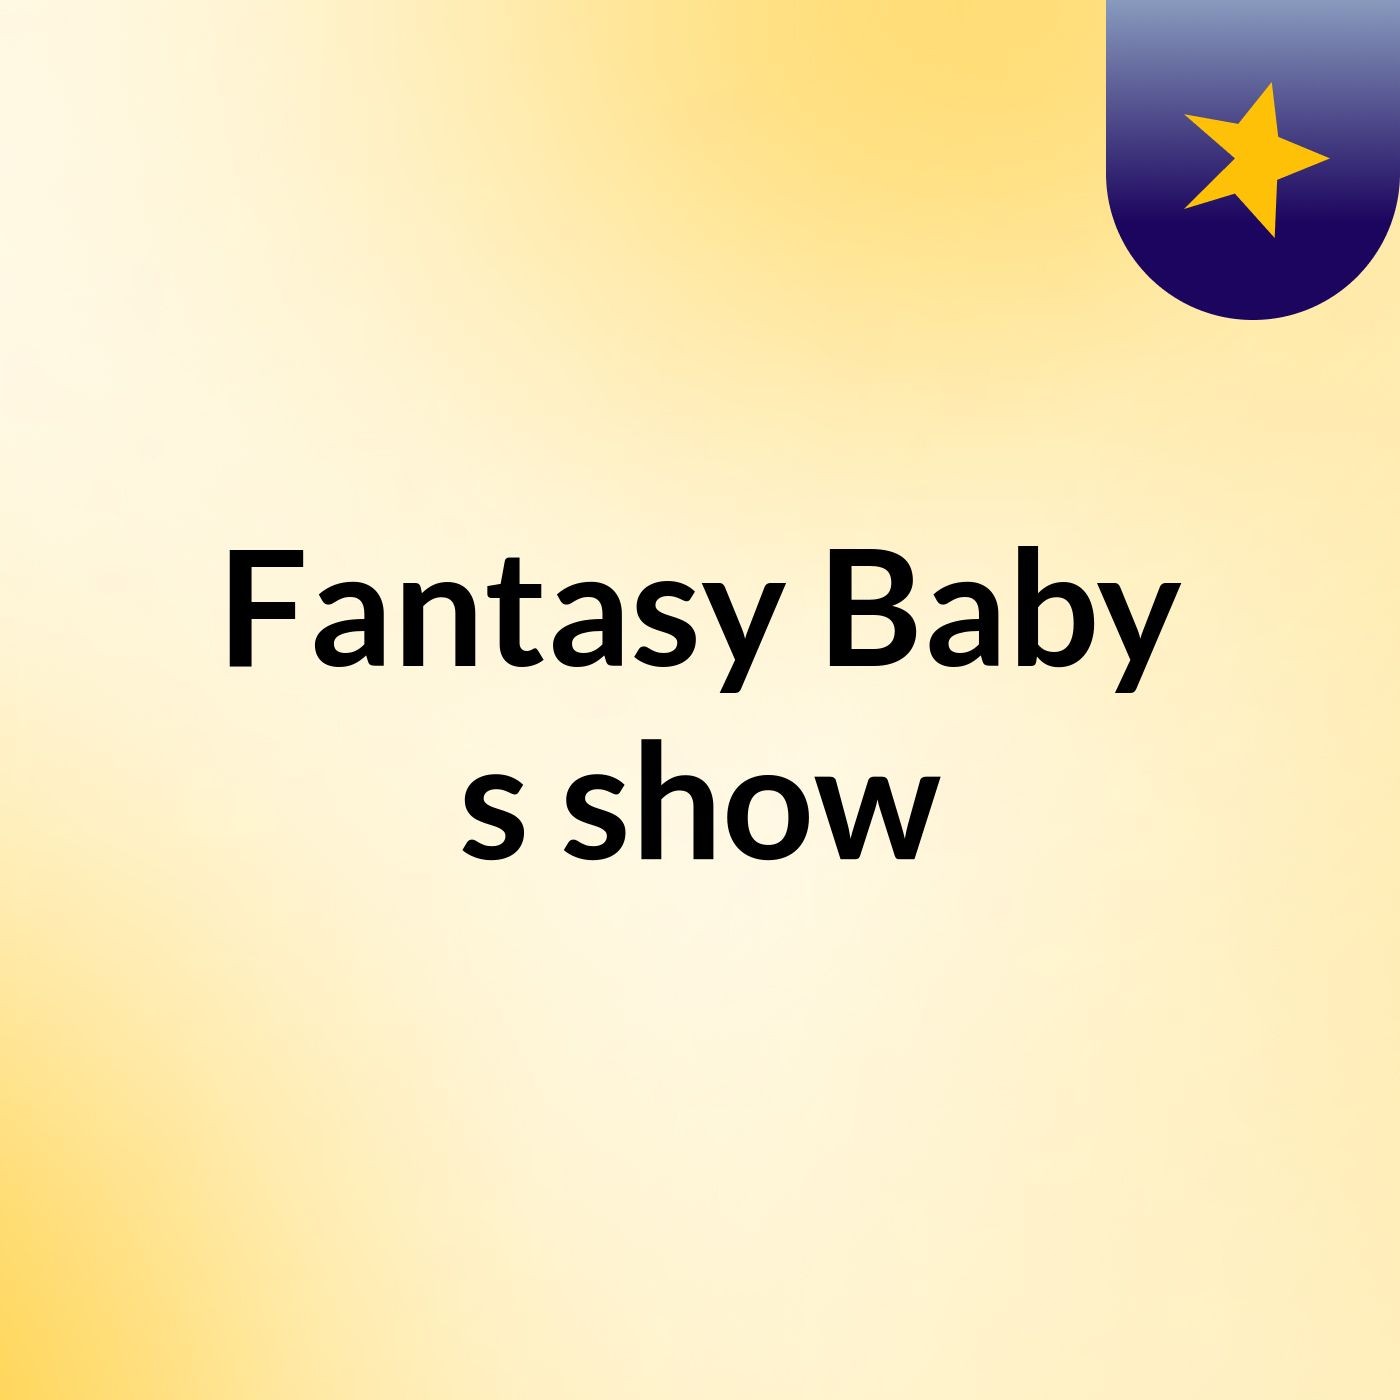 Fantasy Baby's show